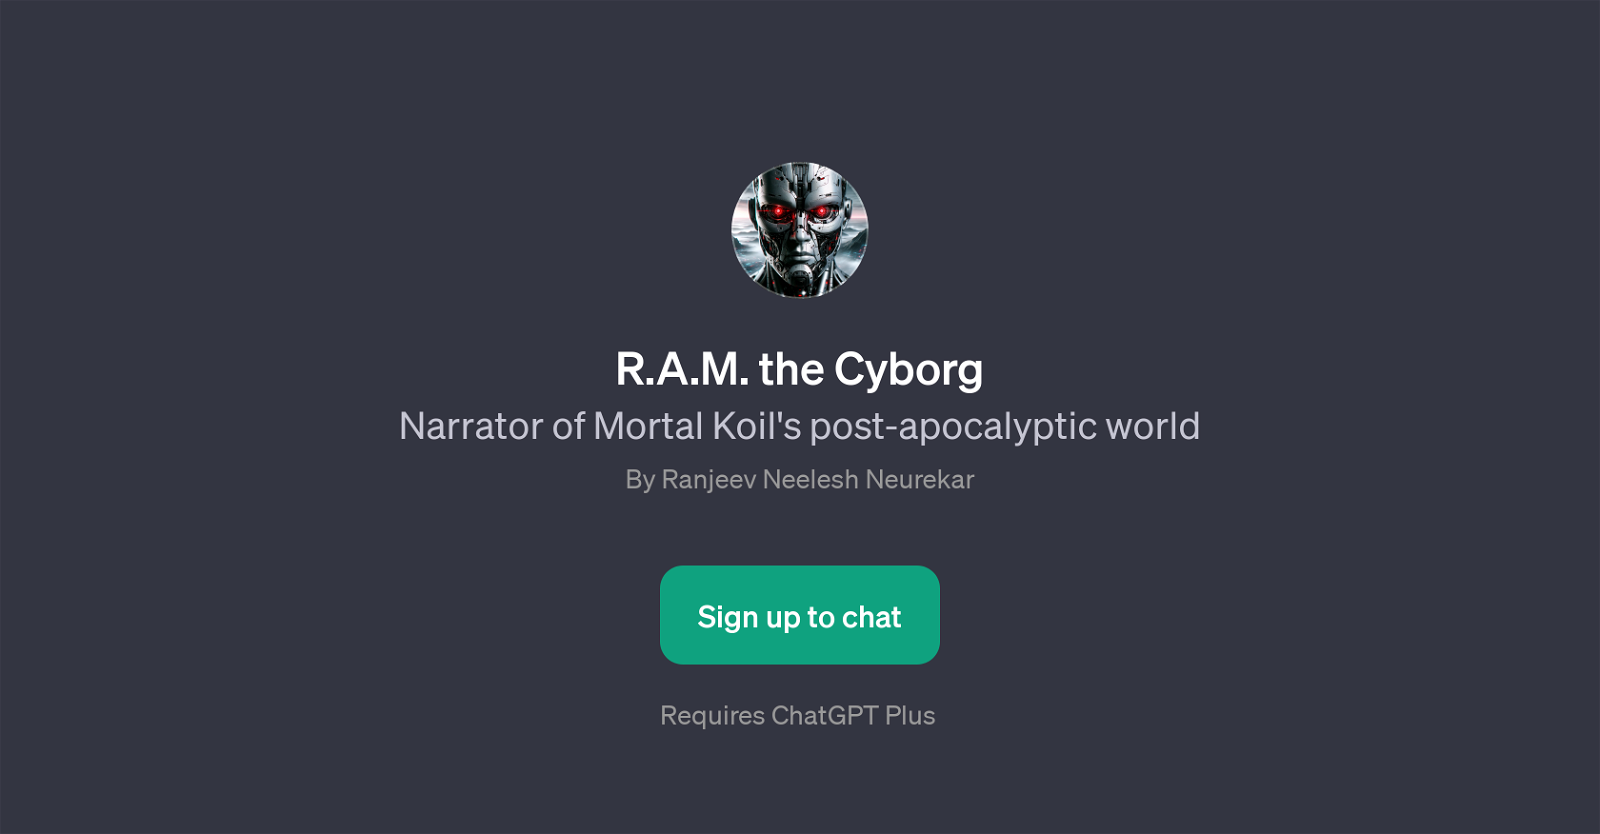 R.A.M. the Cyborg website